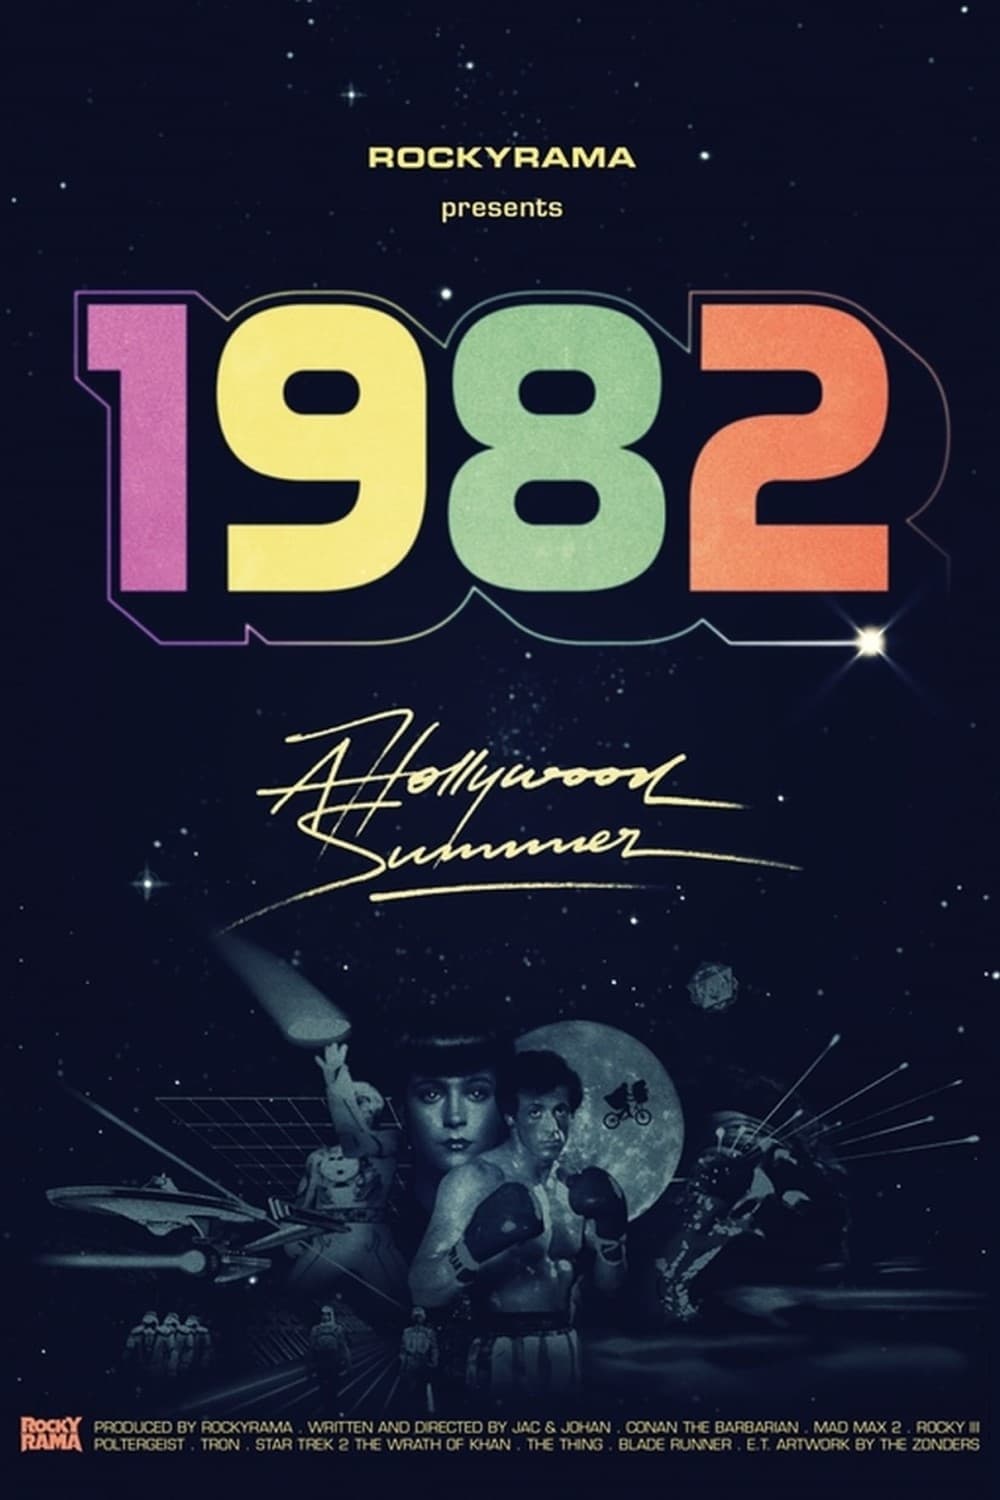 1982 - Hollywood Summer (2019)